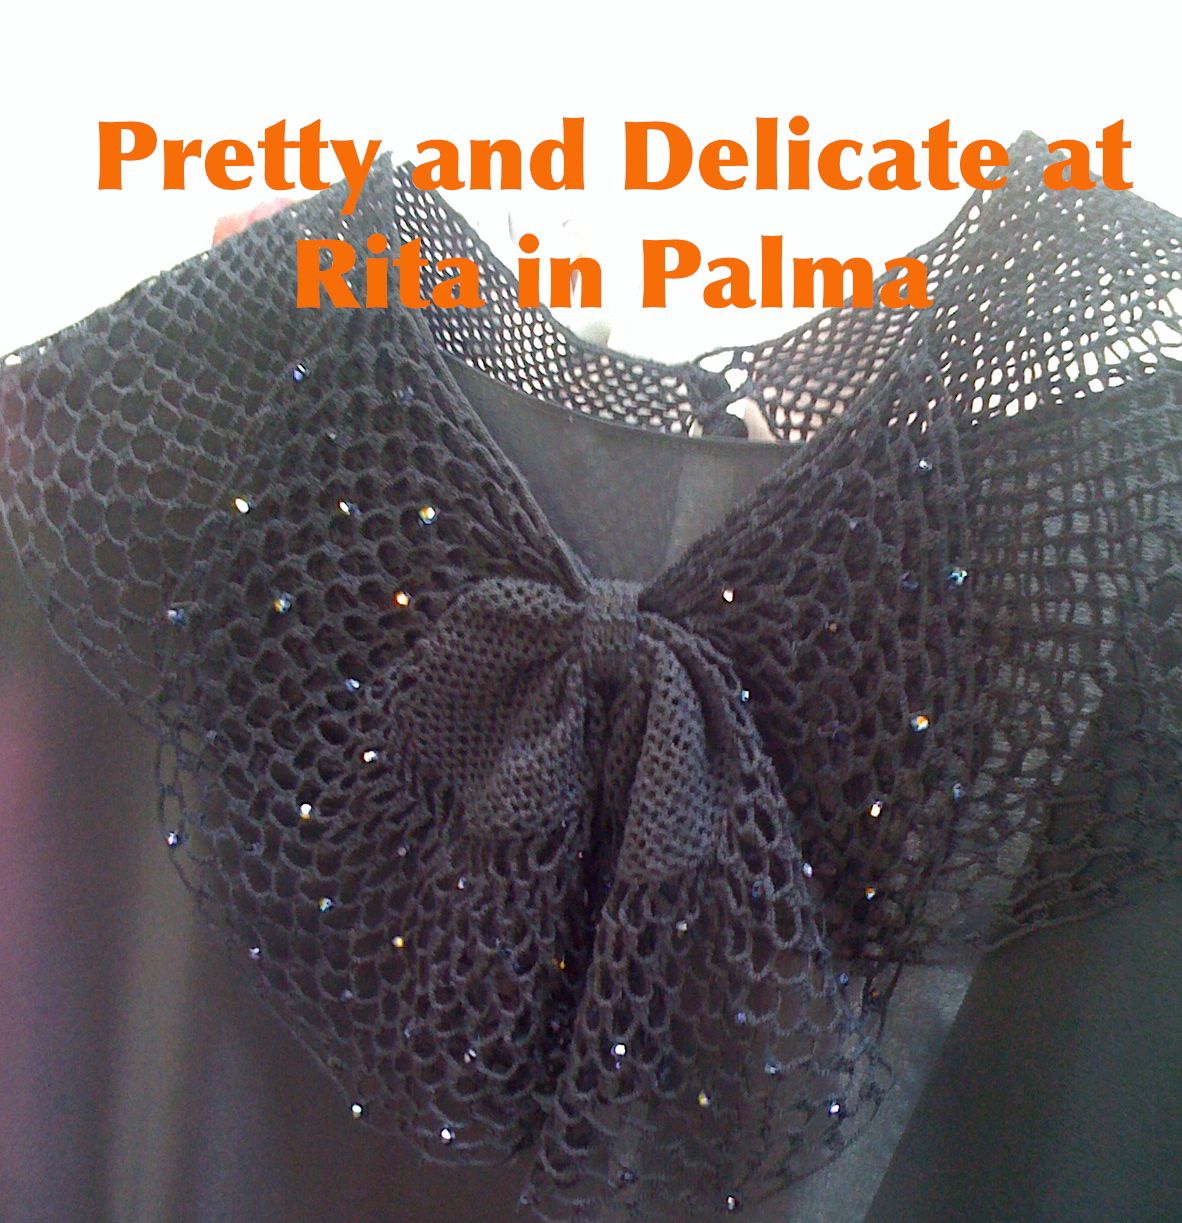 <!--:en-->Rita in Palma a unique and delicate accessories line from Berlin<!--:-->